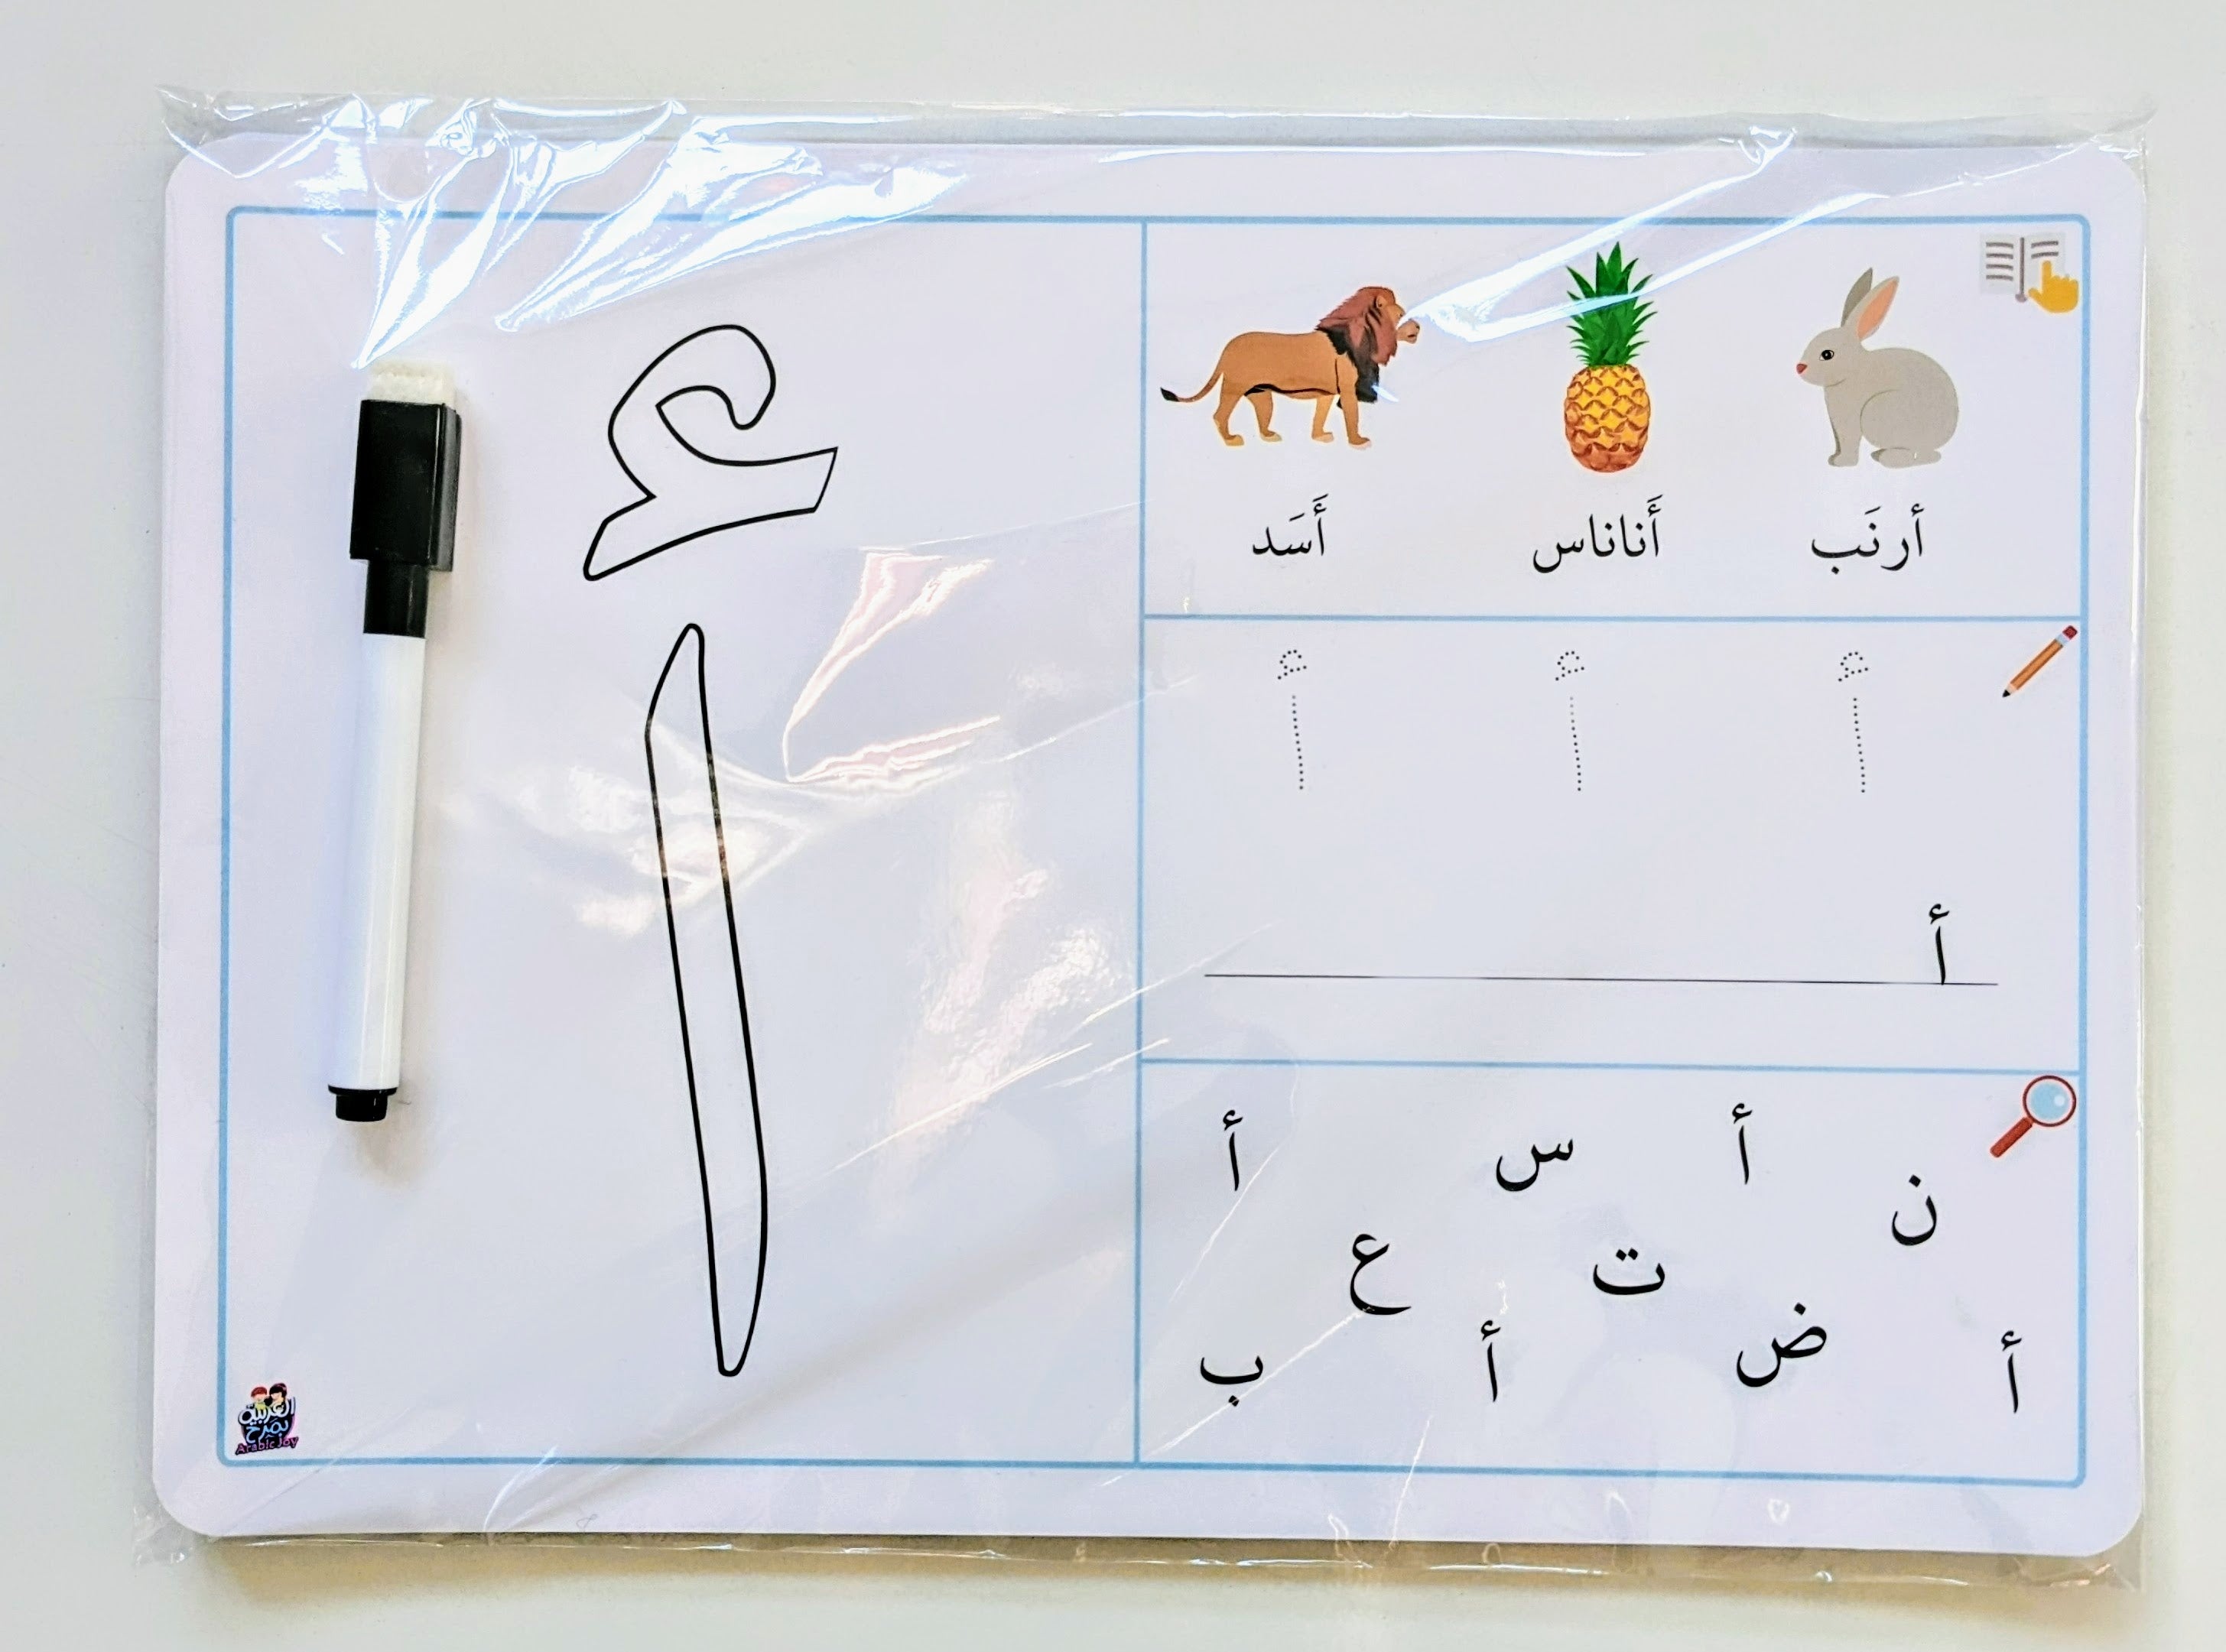 Arabic Letters Playdough Mats L1 - بساط المعجون المرحلة الأولى